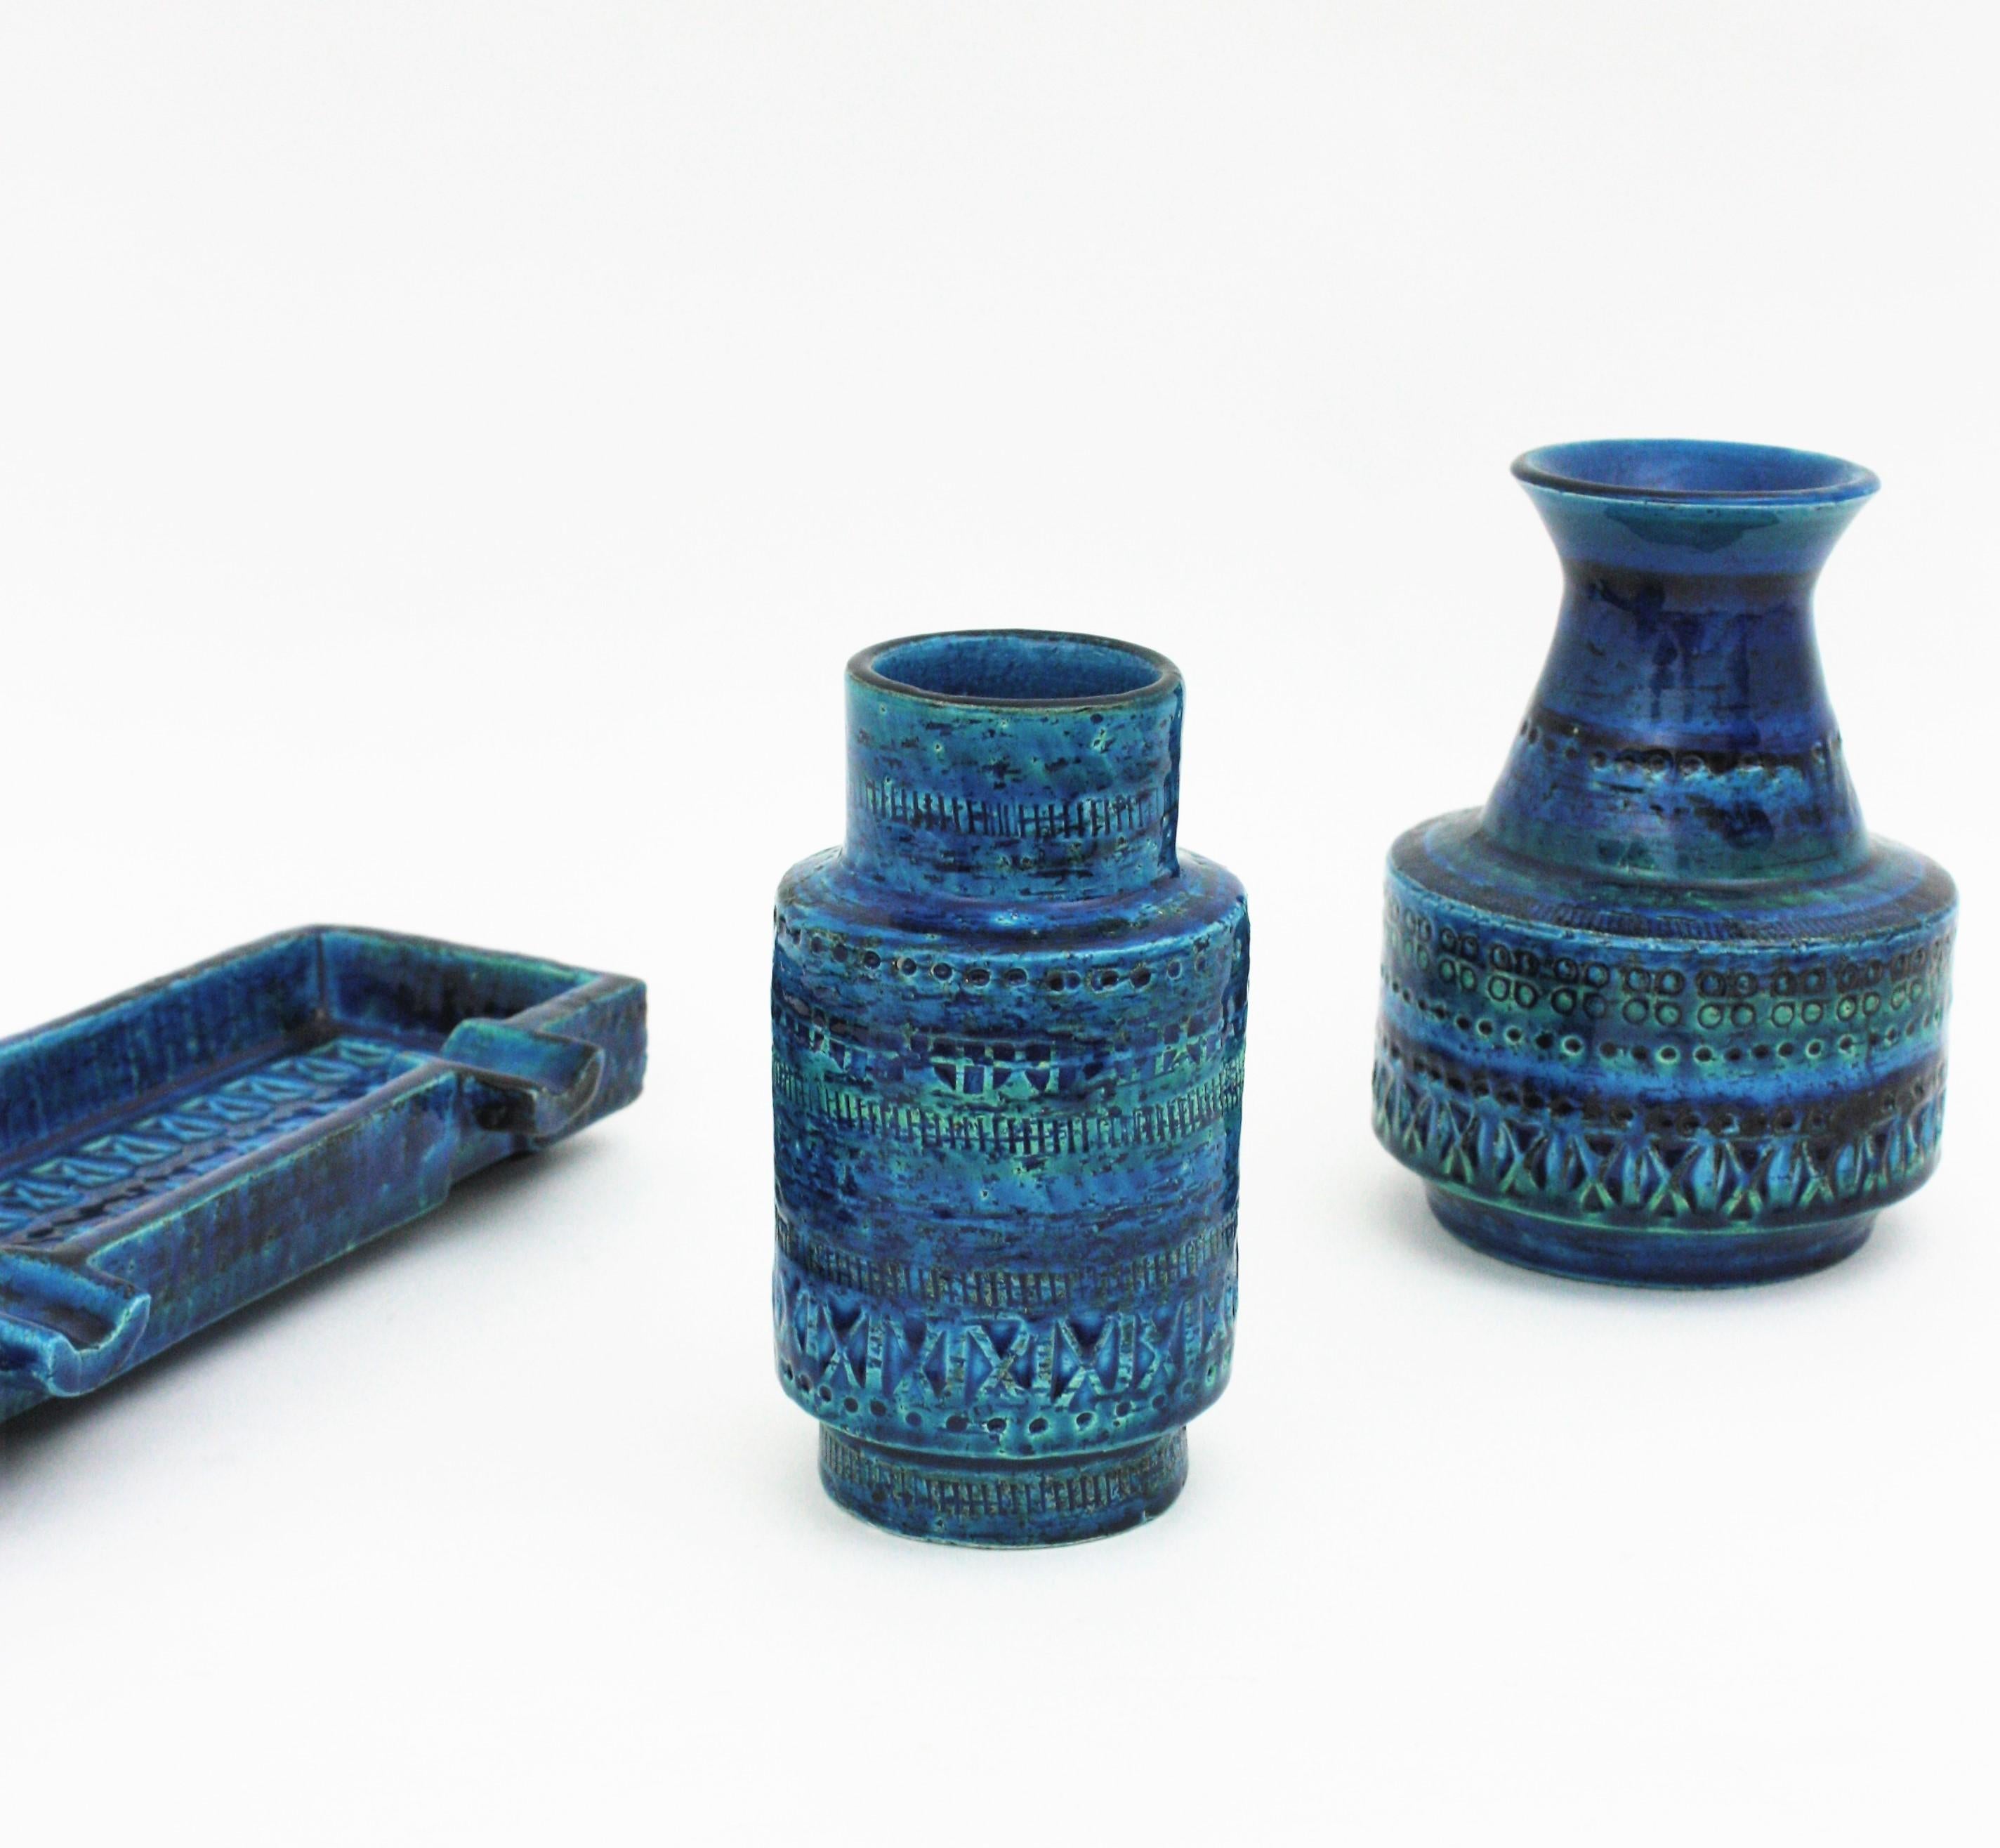 Bitossi Aldo Londi Rimini Blaue Keramikvase, 1960er Jahre (20. Jahrhundert) im Angebot